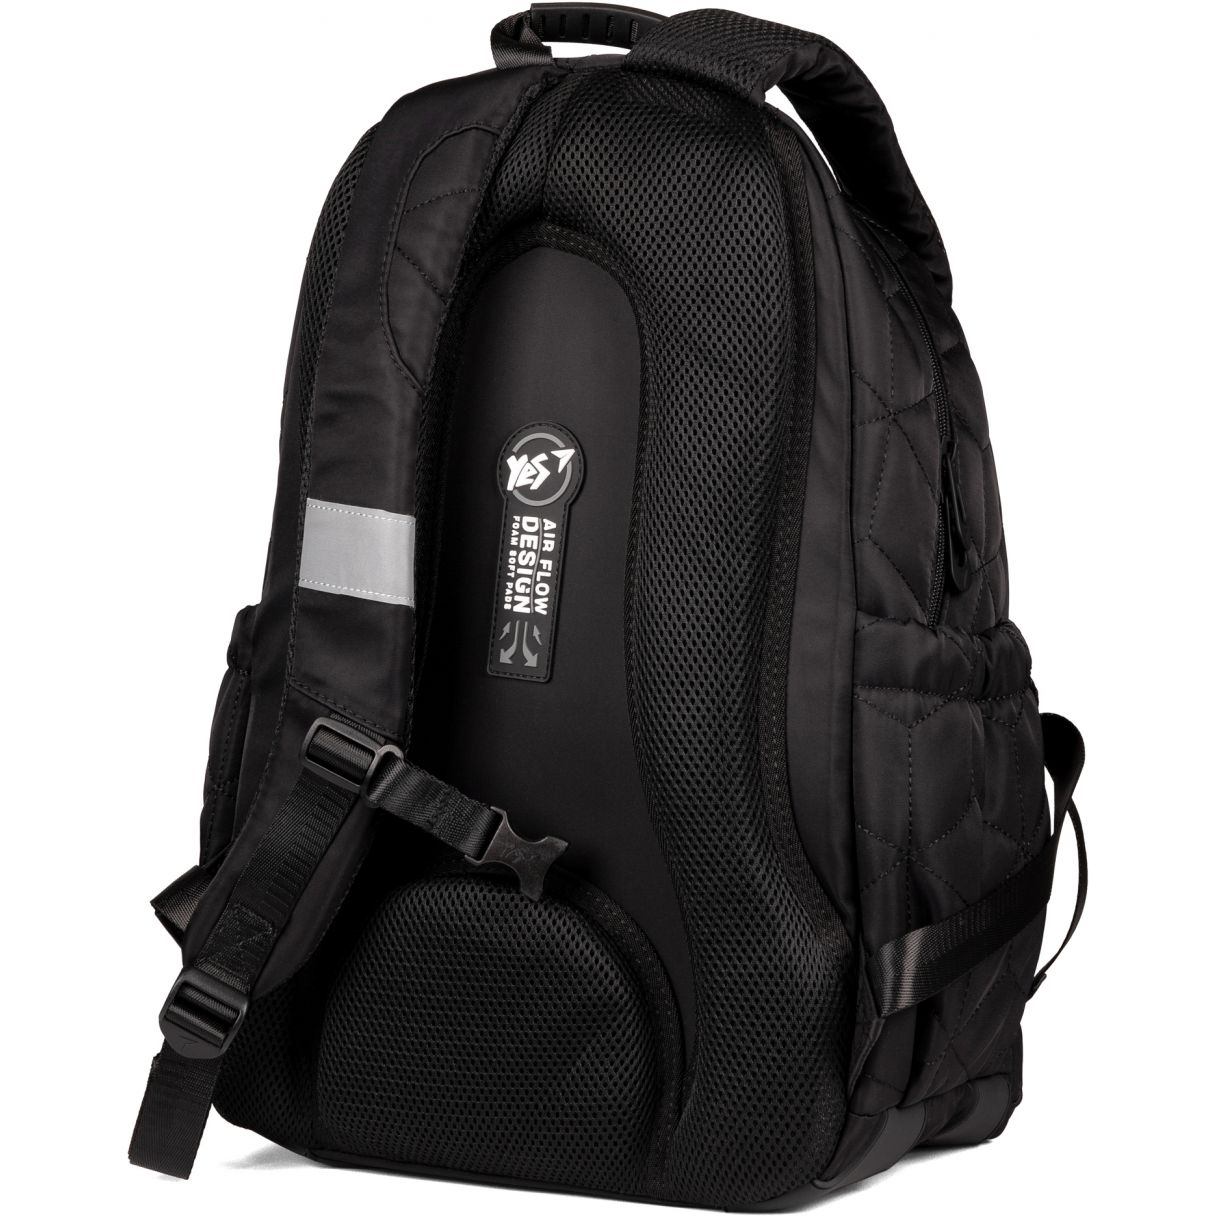 Школьный рюкзак Yes TS-47 Black (559763) - фото 3